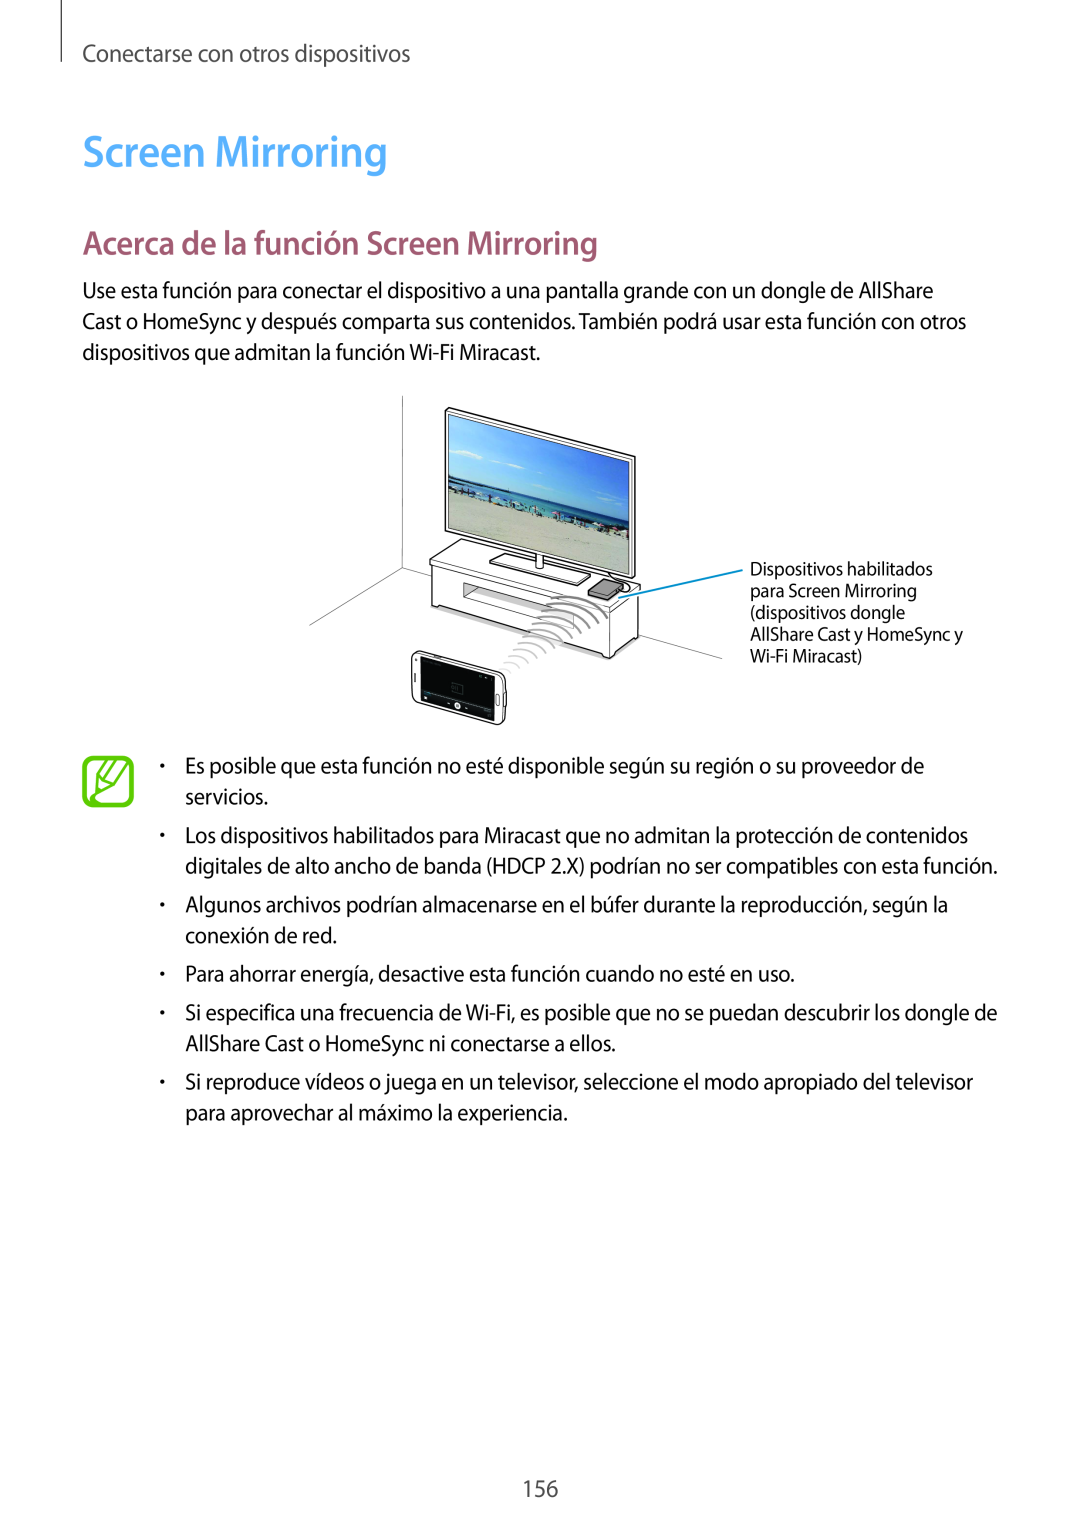 Samsung SM-G901FZDADTM, SM-G901FZBADTM manual Acerca de la función Screen Mirroring, Conectarse con otros dispositivos 